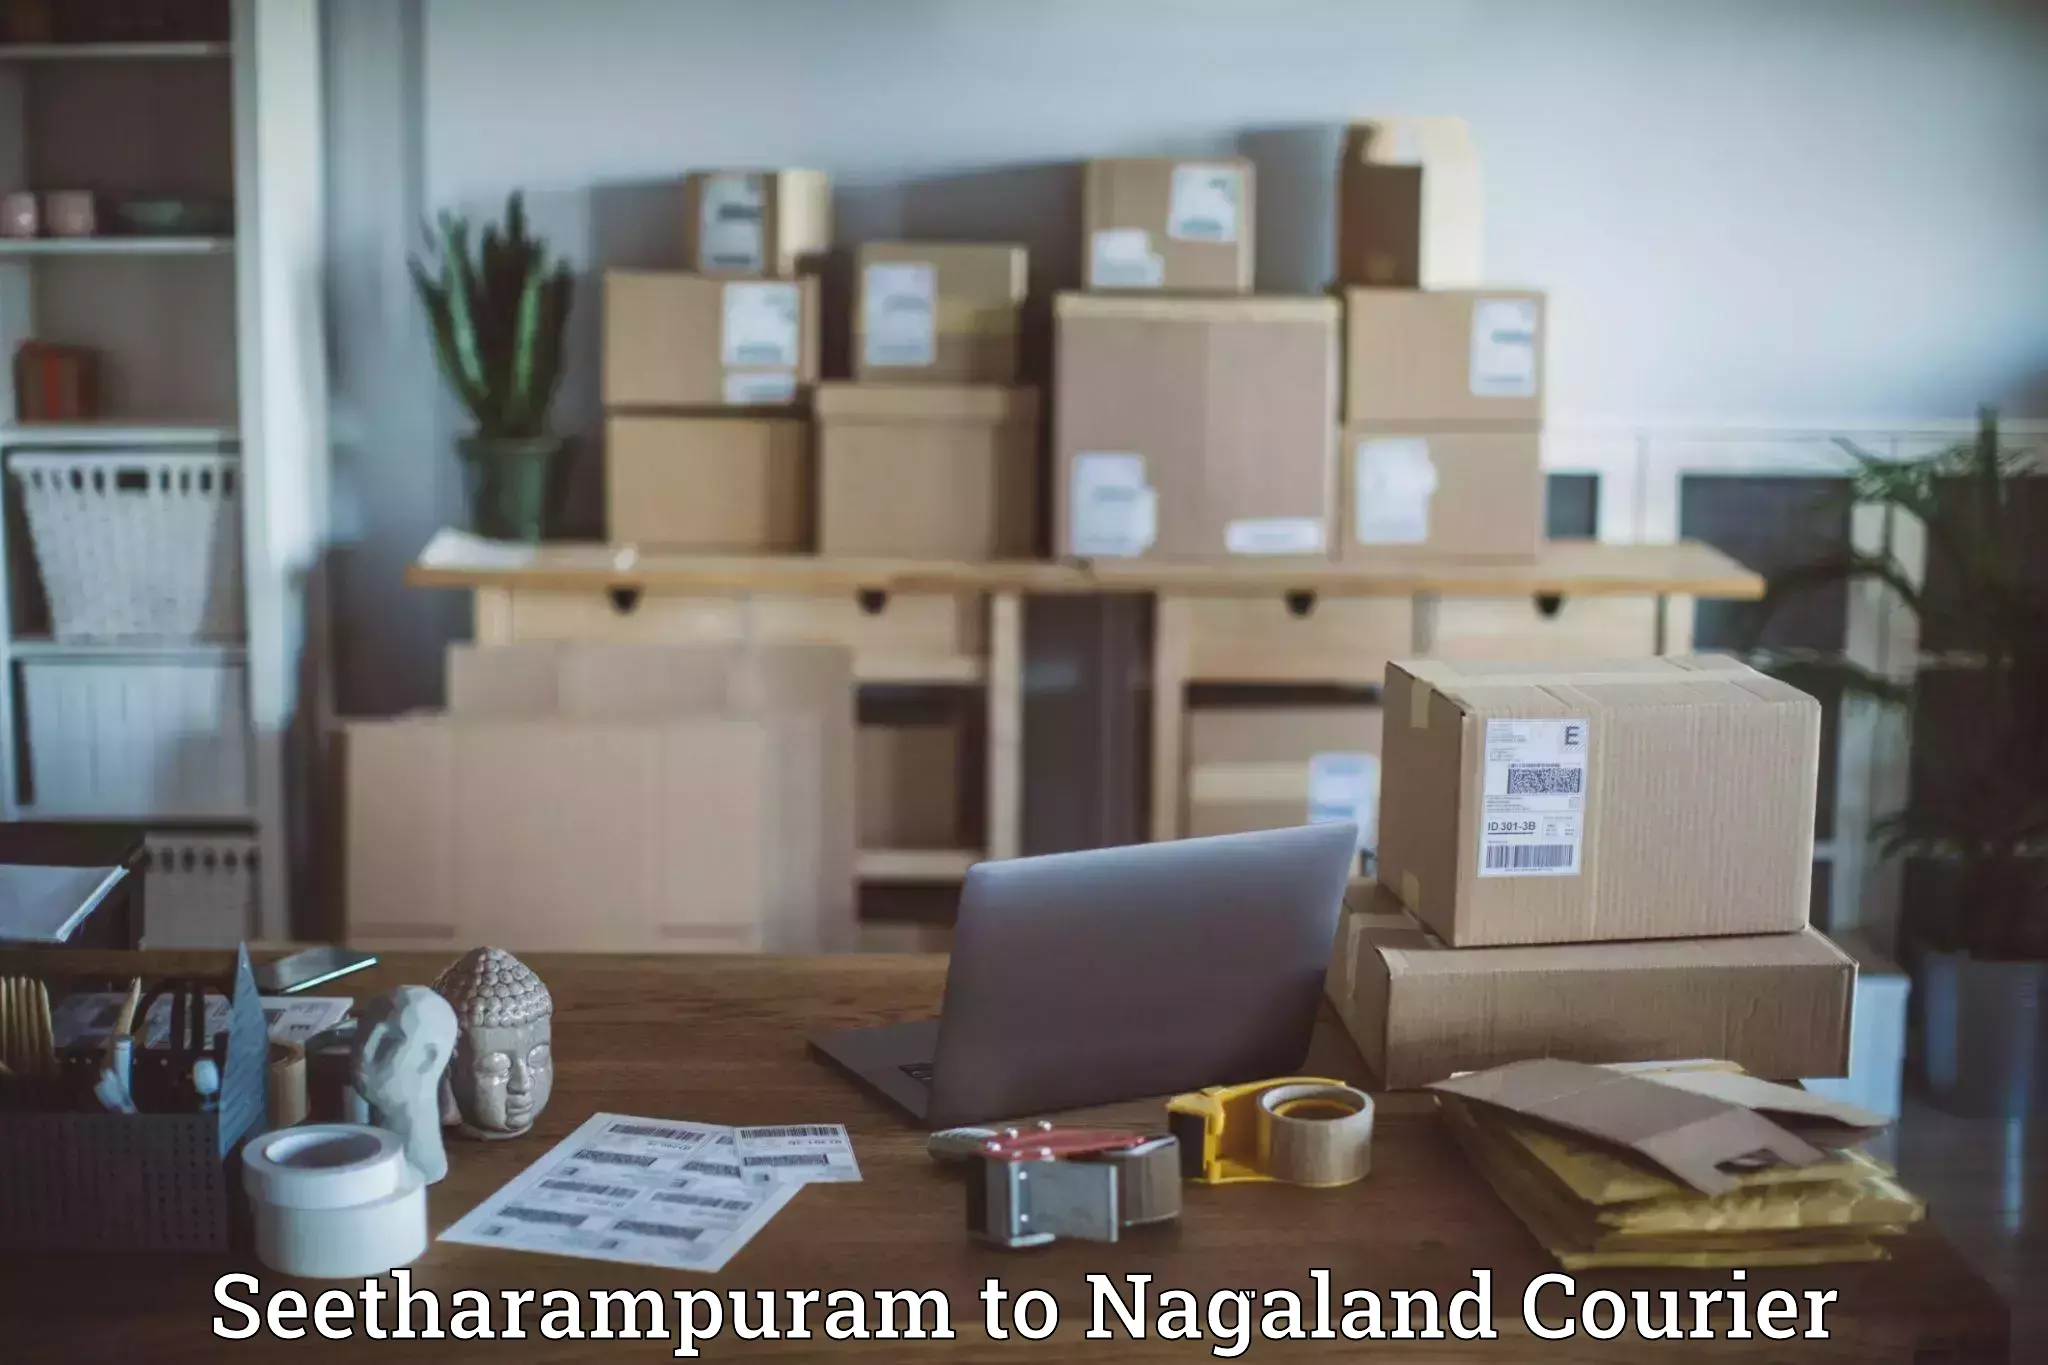 High-performance logistics Seetharampuram to Nagaland